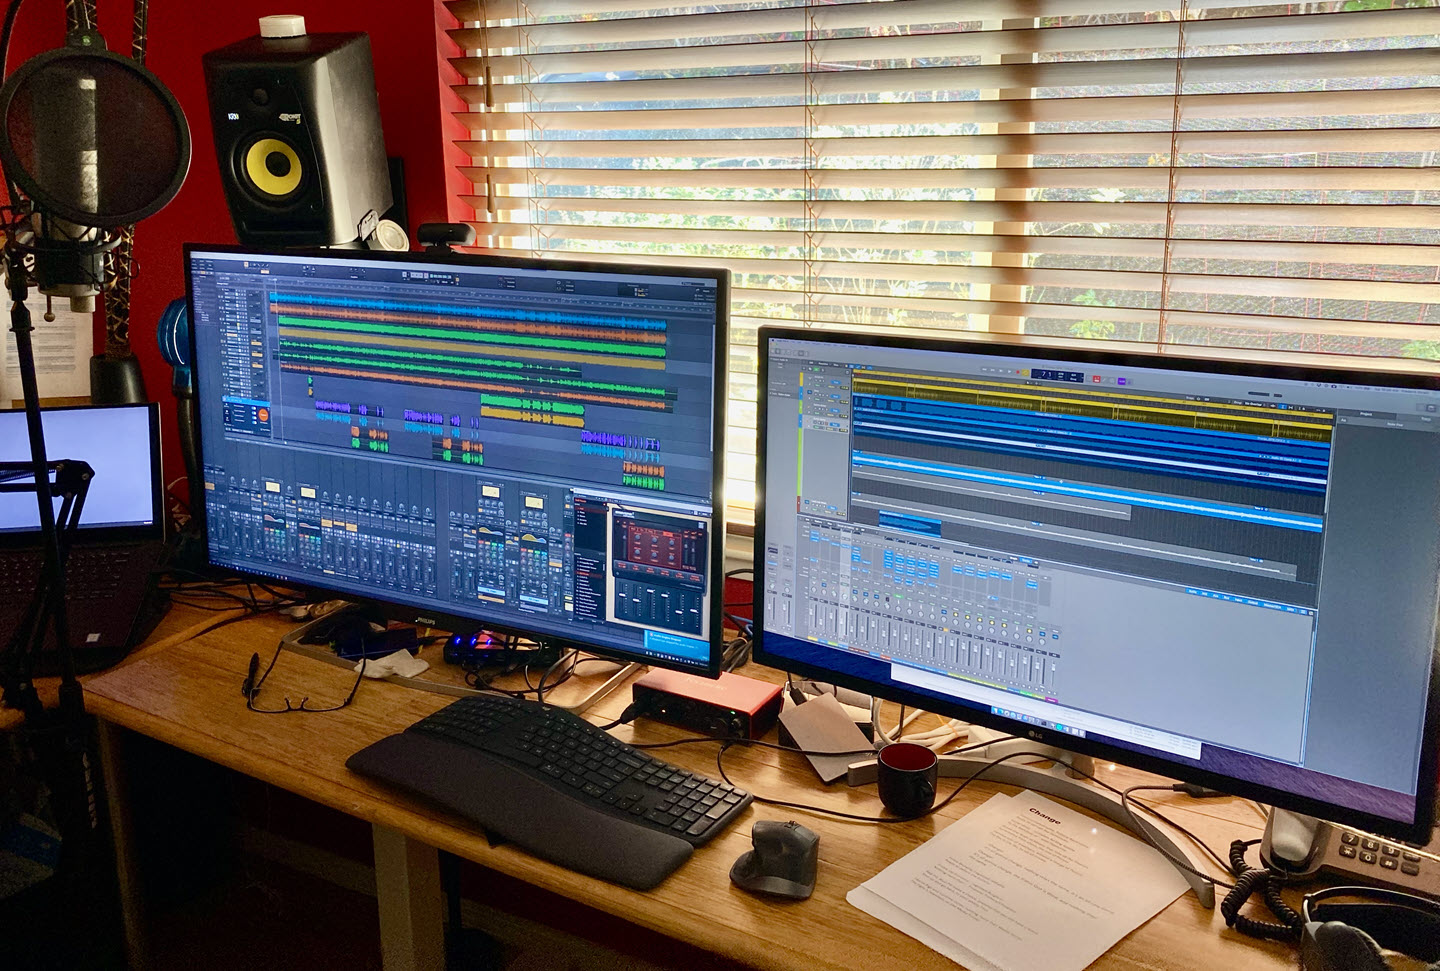 Mac Setups: Mac Music Studio & Development Workstation